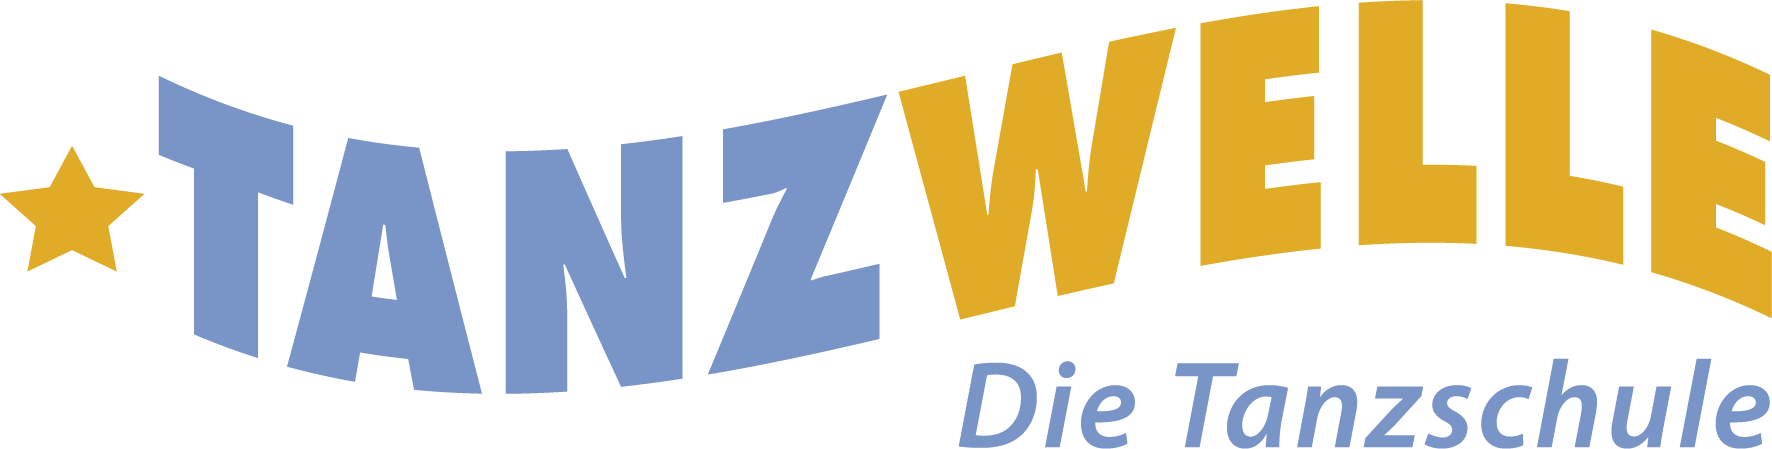 Tanzwelle - Die Tanzschule GmbH Logo